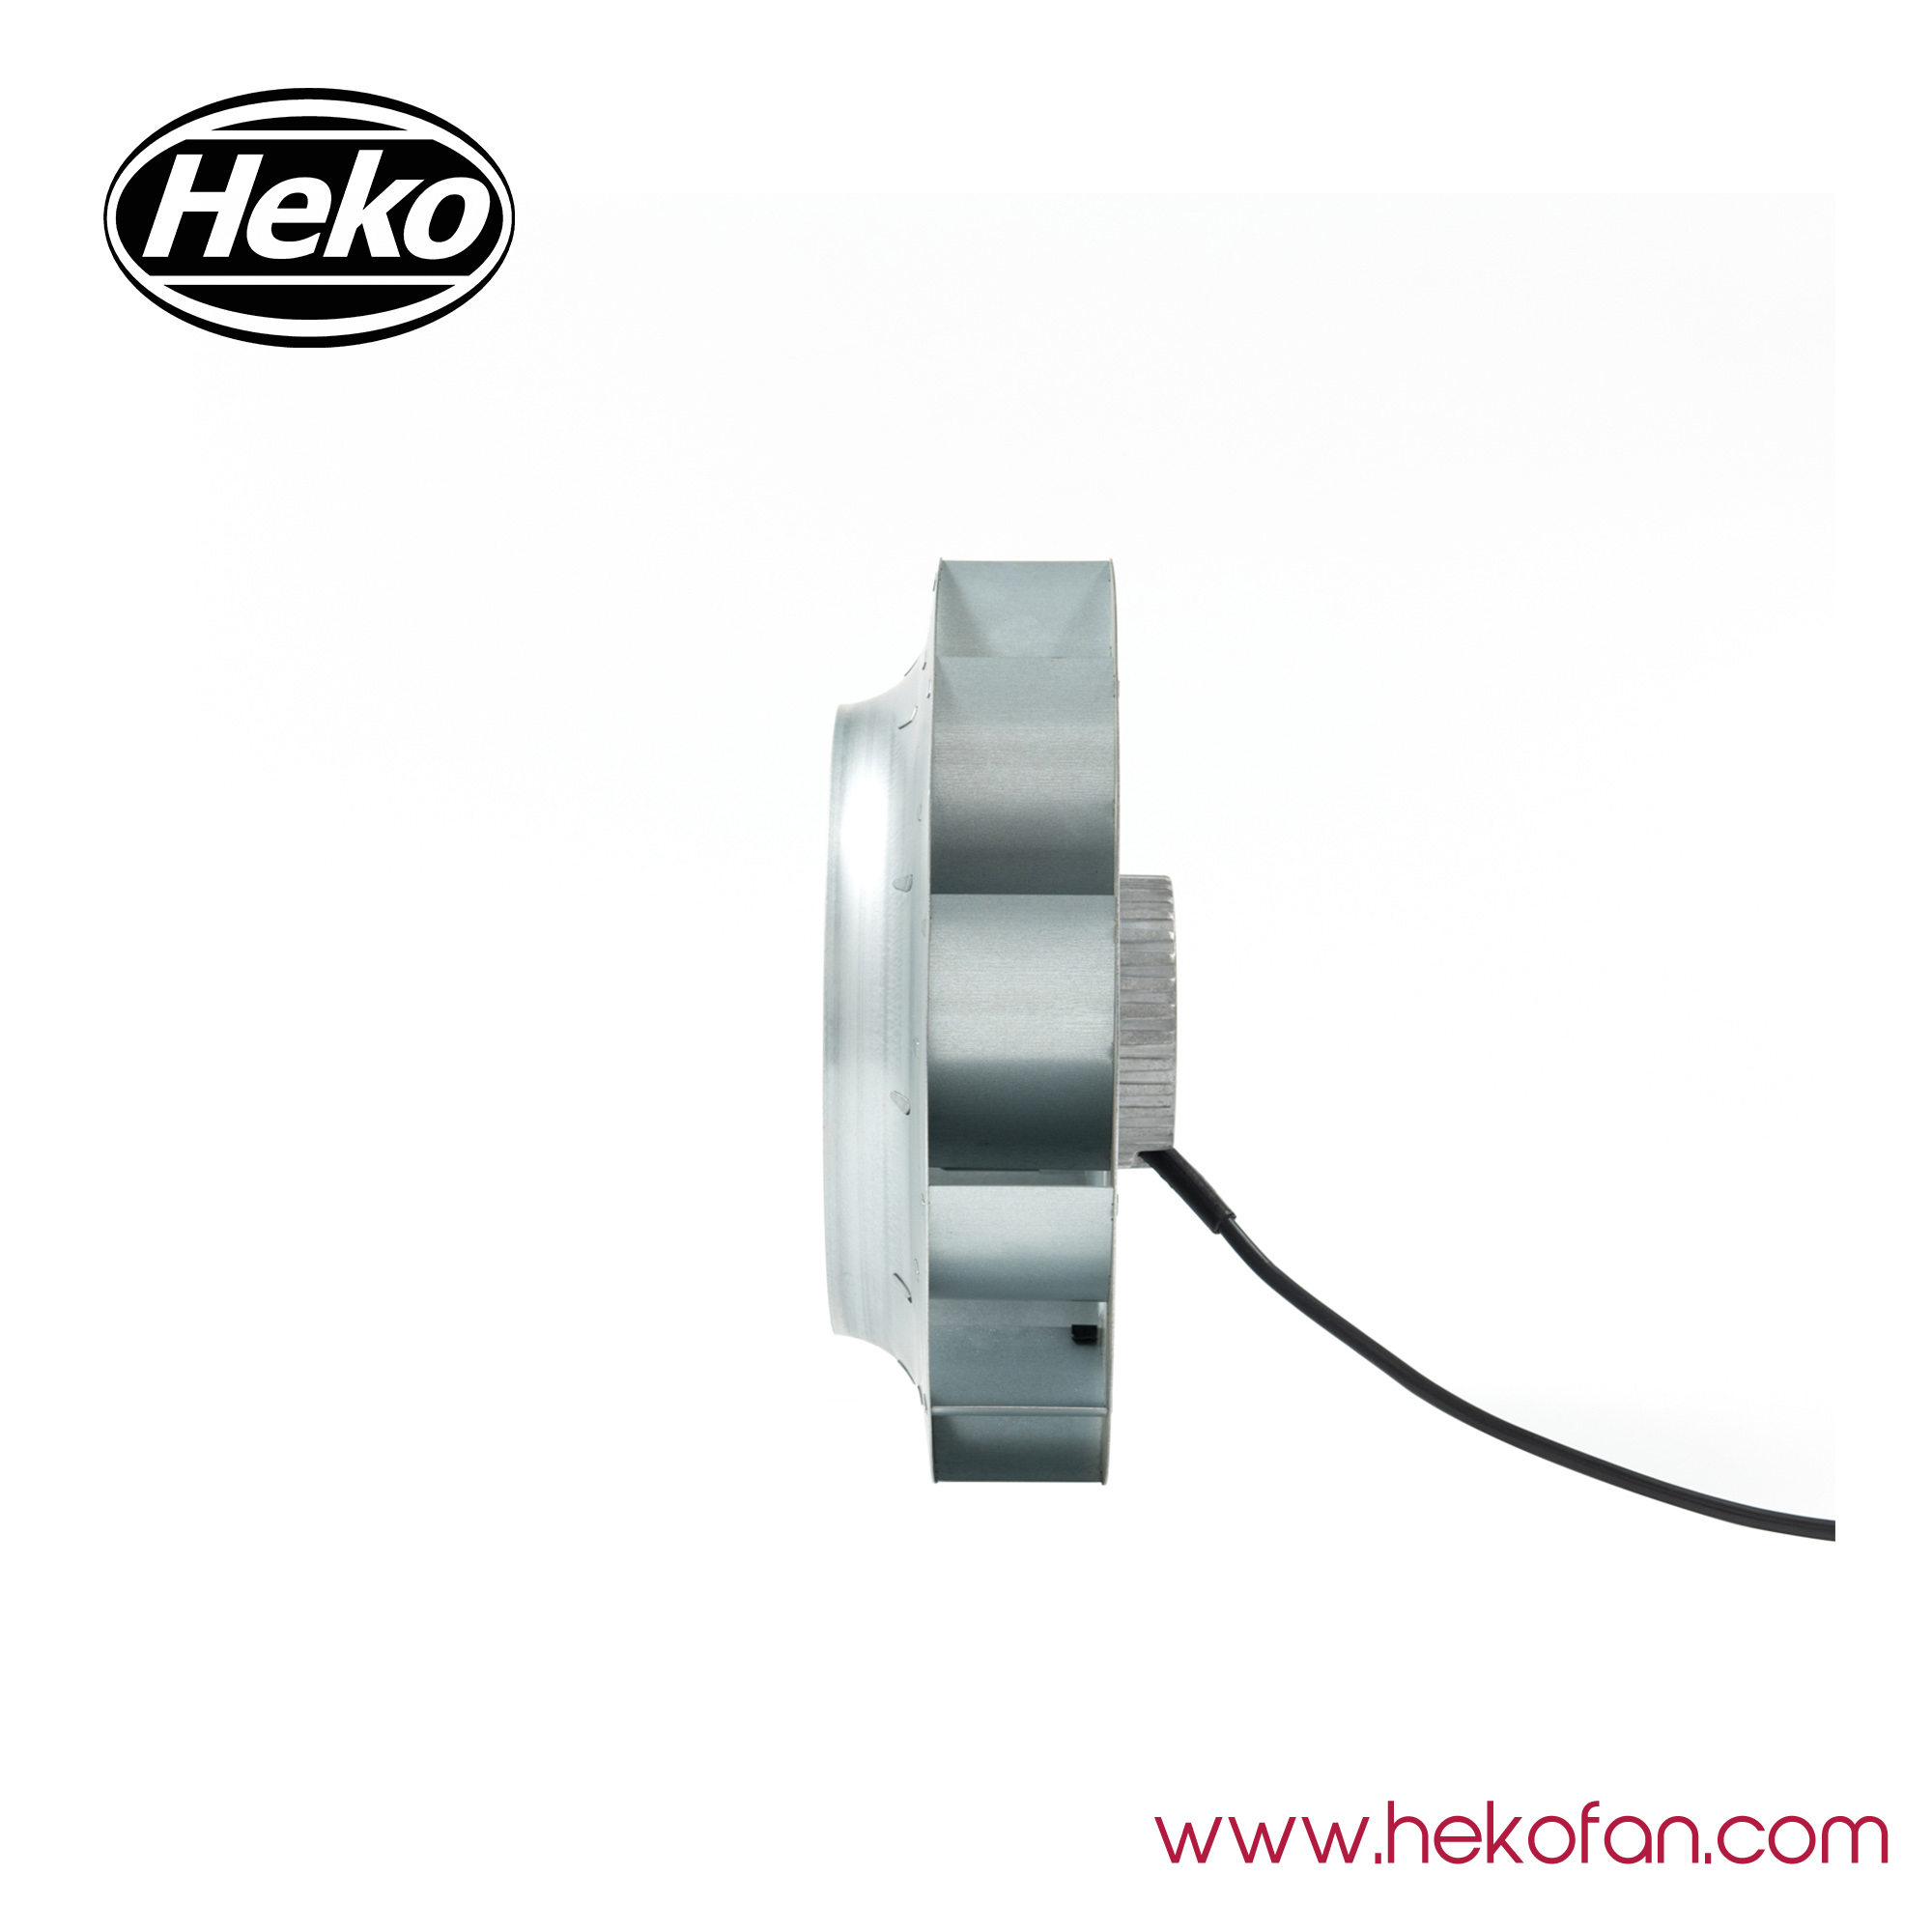 HEKO DC280mm High Pressure Kitchen Extractor Centrifugal Fan